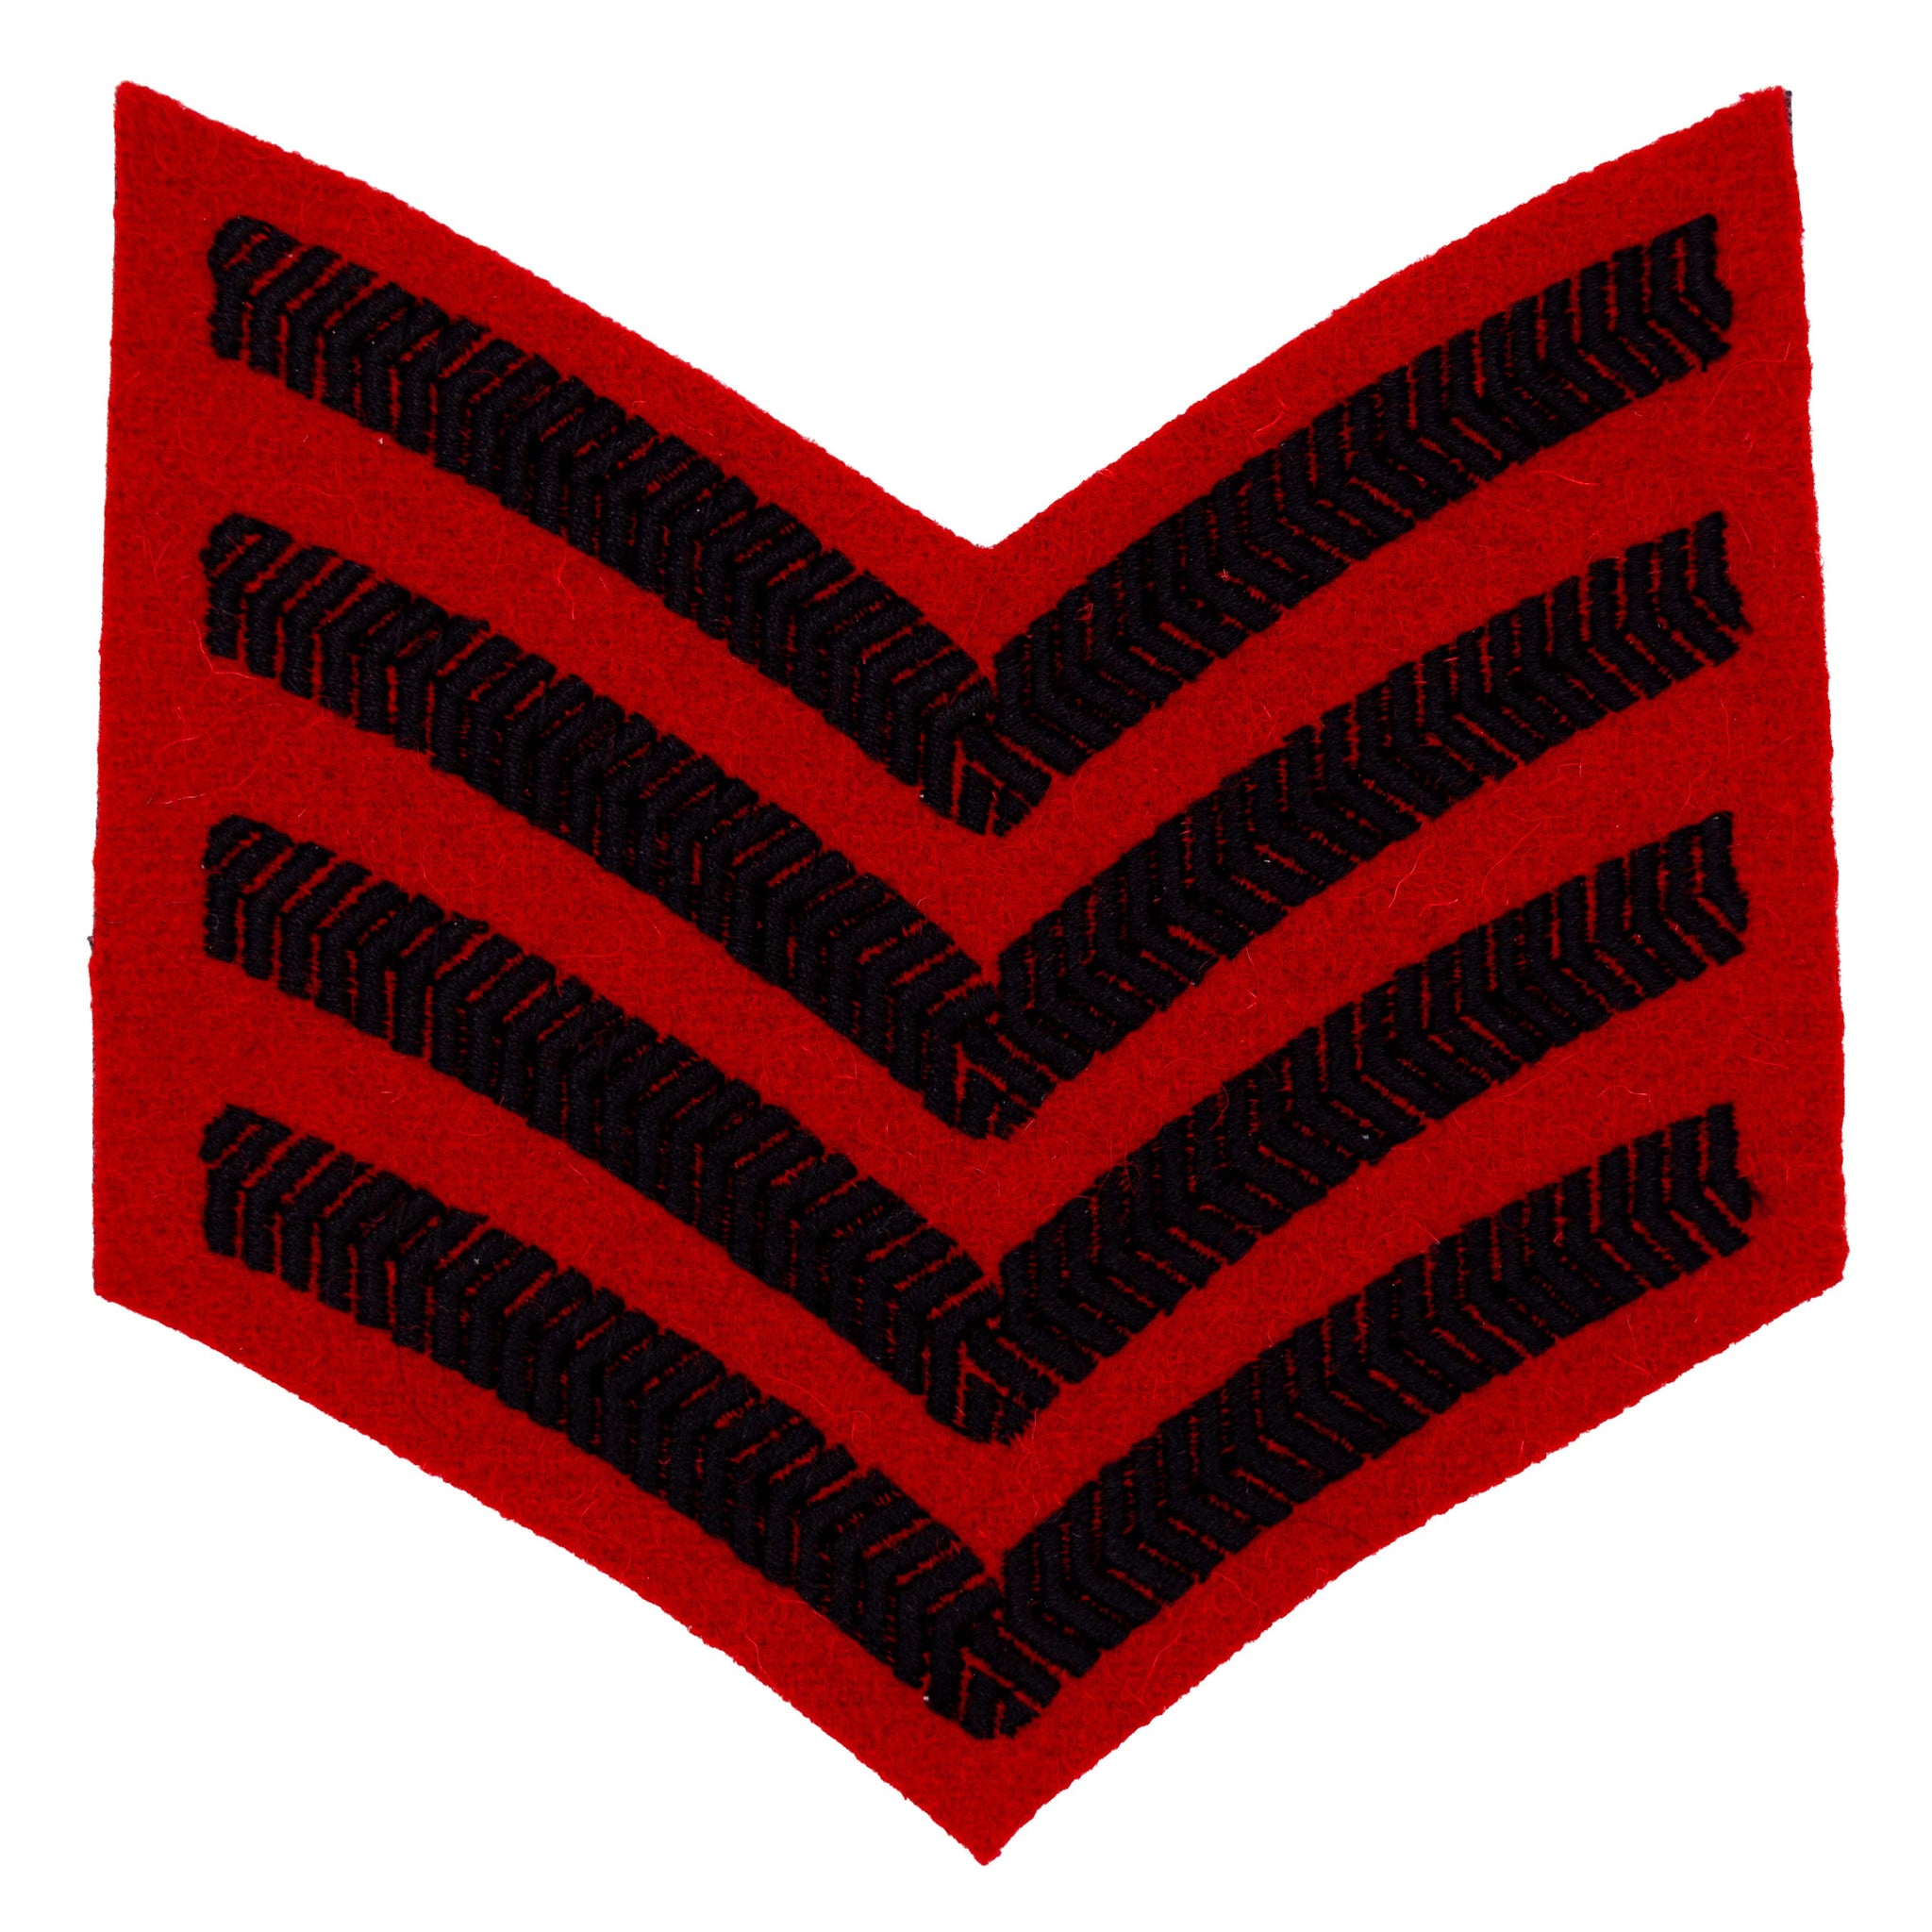 4 Bar Chevron Drum Major Band of the Brigade of Gurkhas Service Stripe British Army Badge